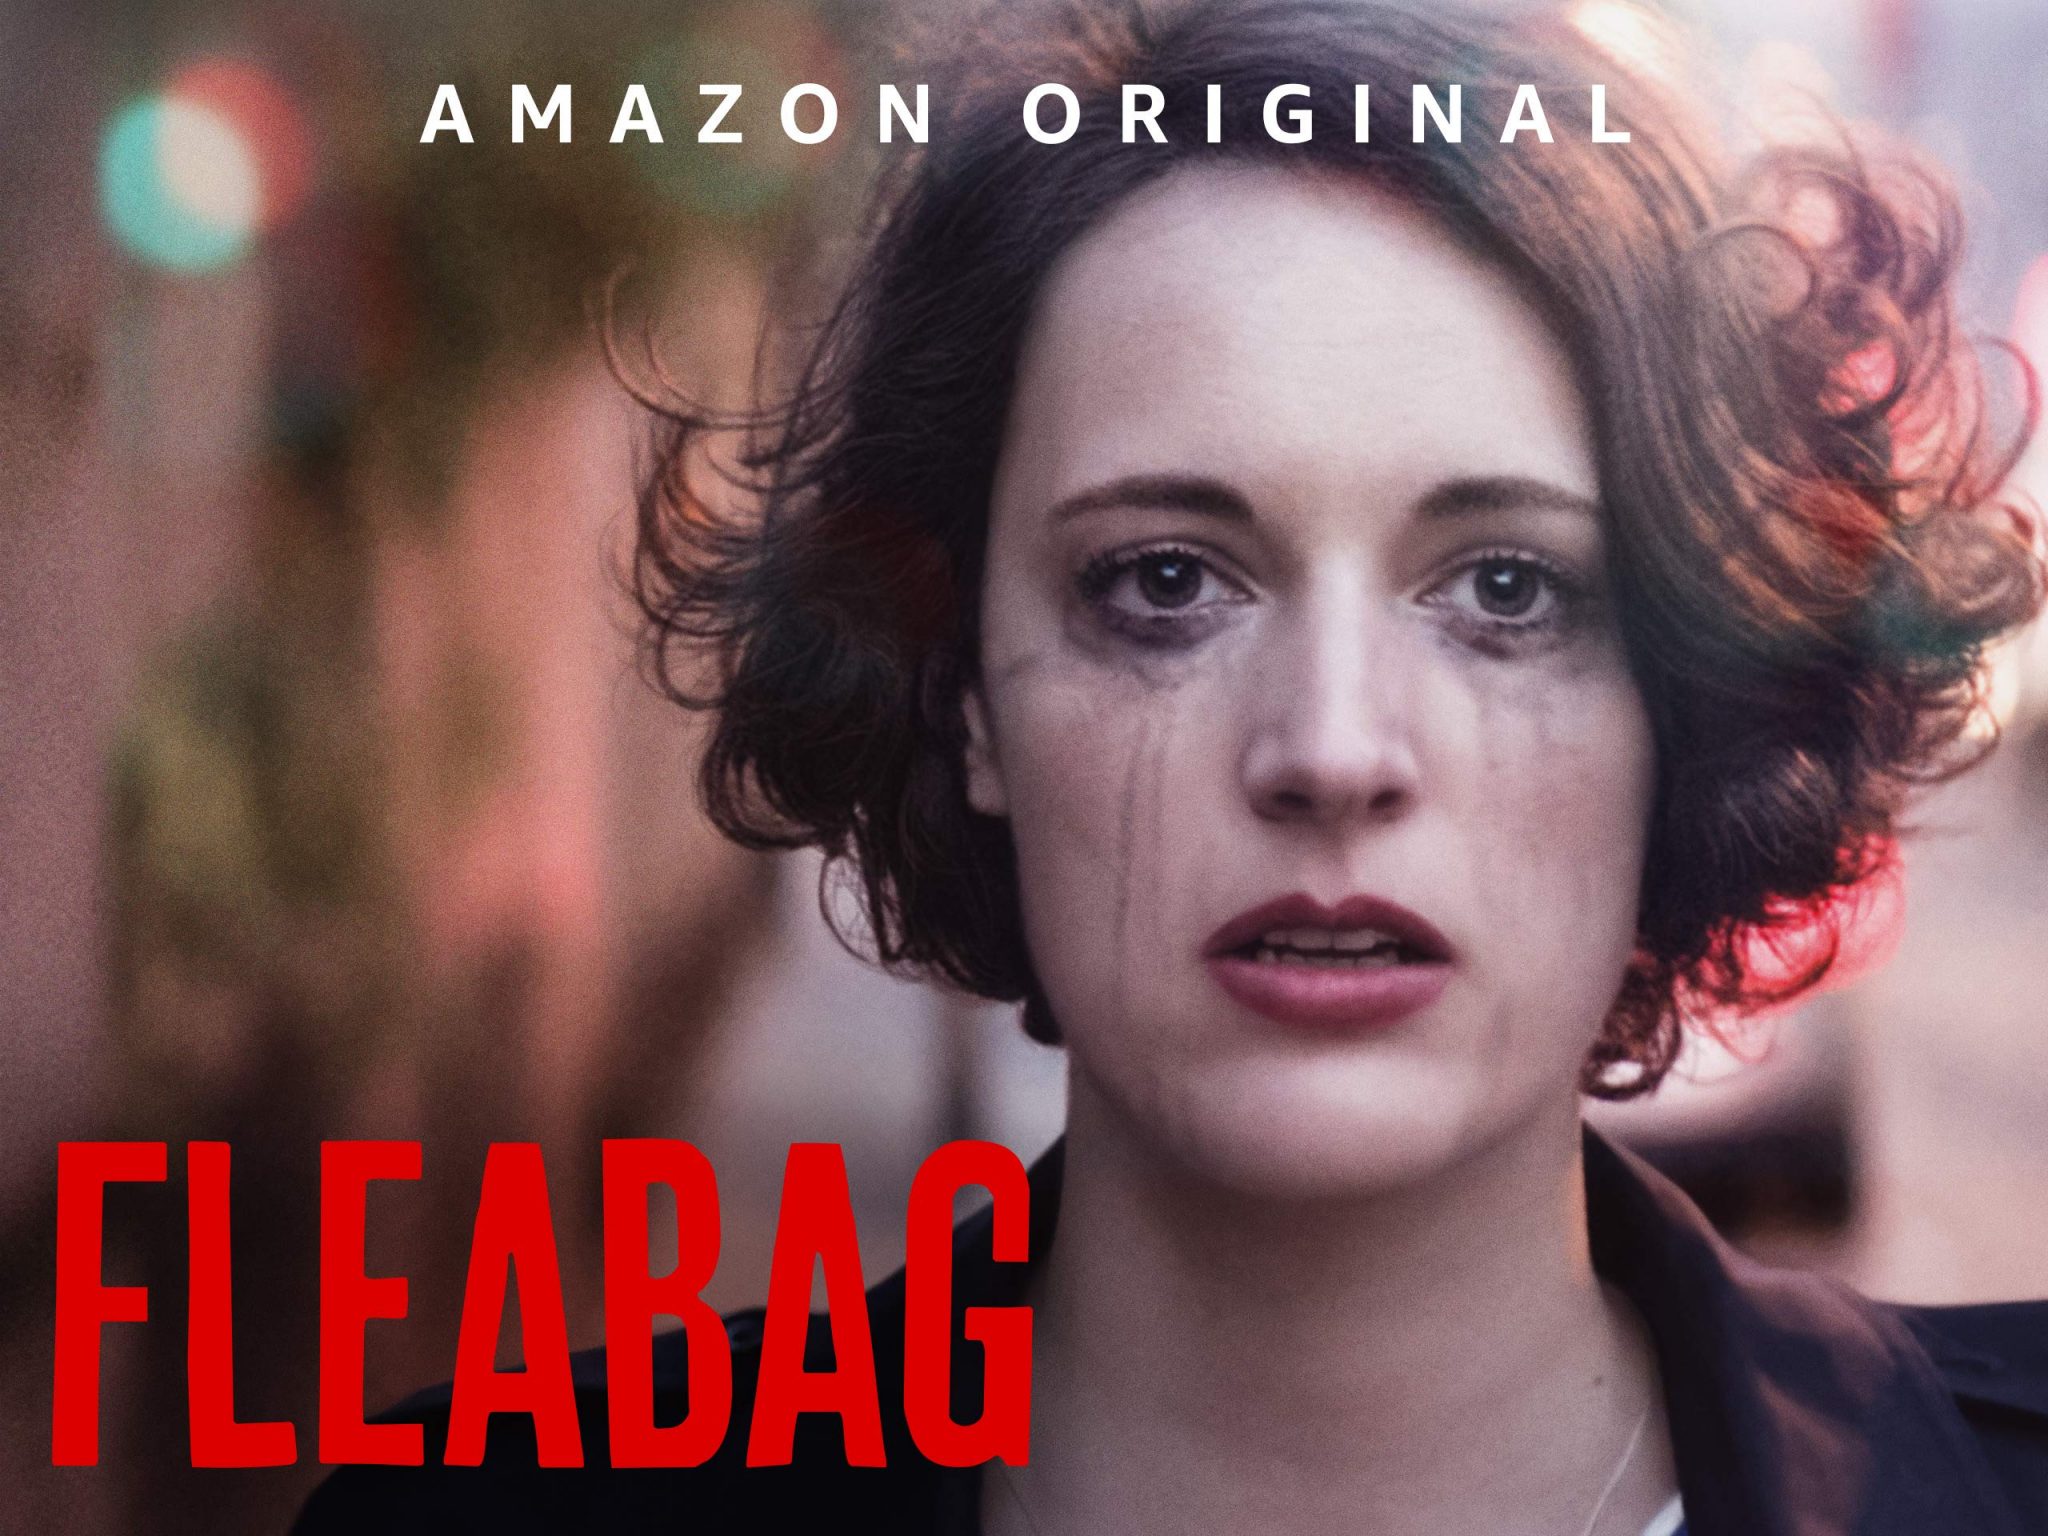 Fleabag (BBC, Amazon Prime)